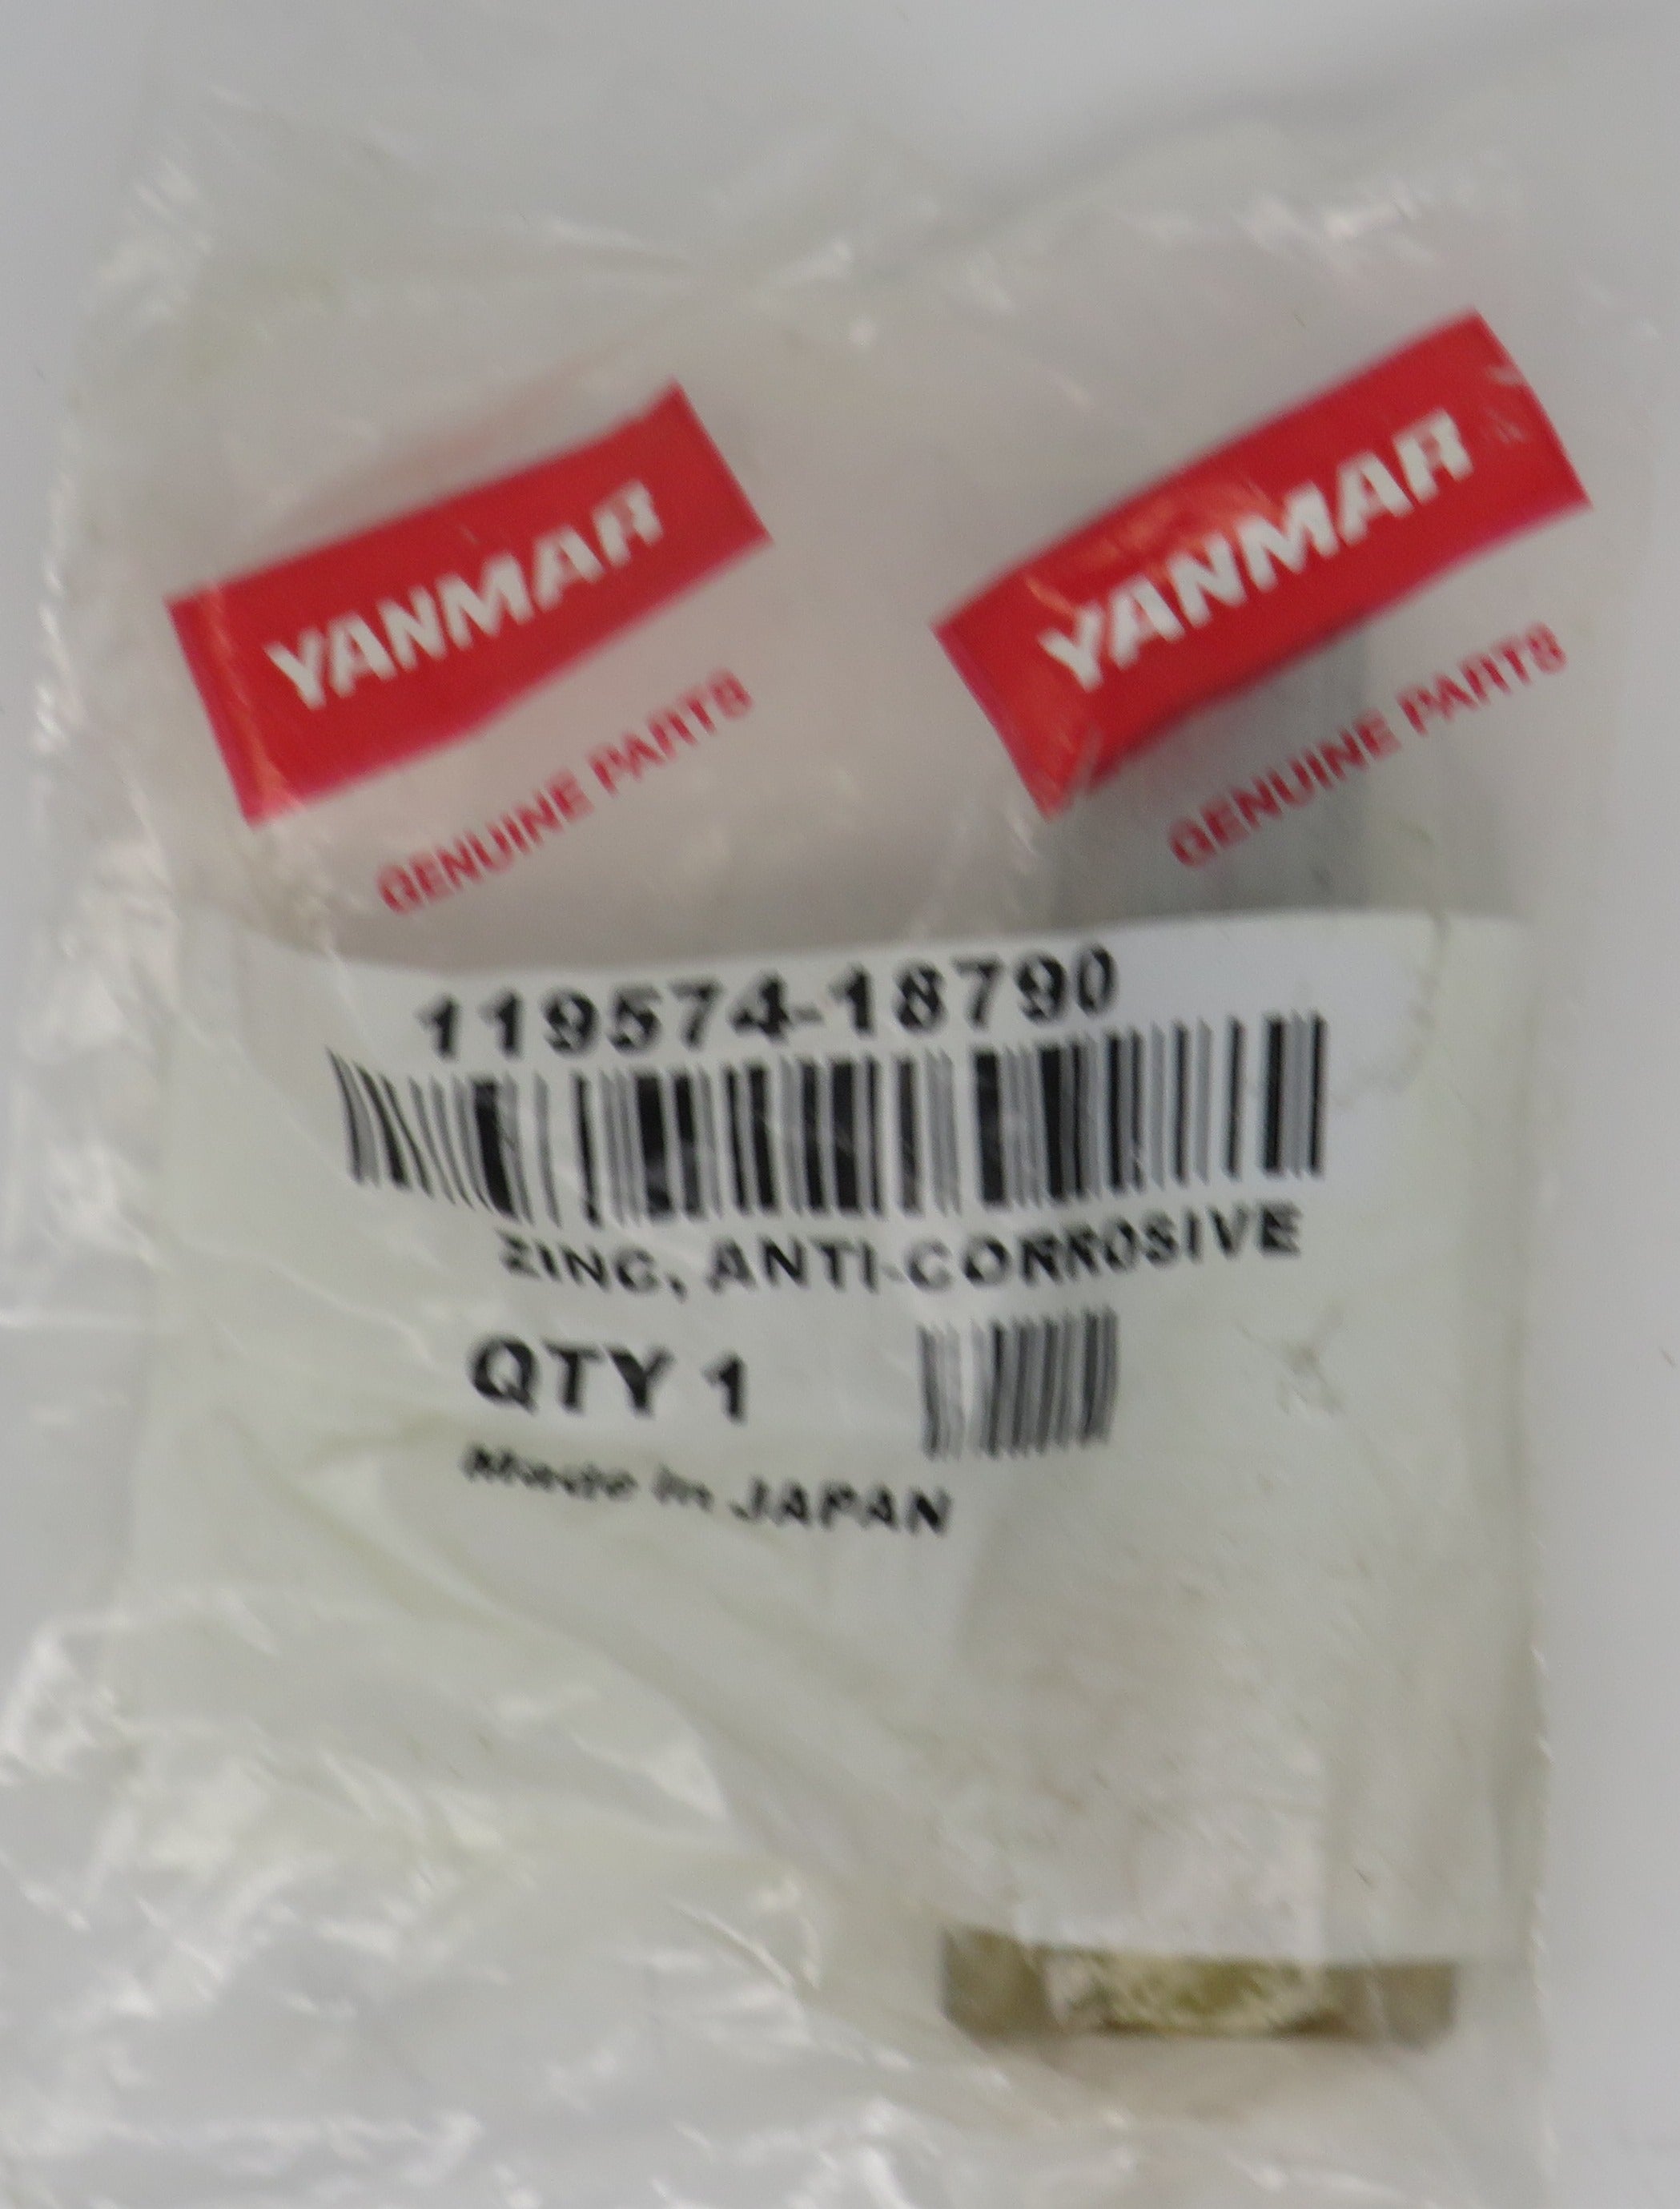 119574-18790 Yanmar Large Zinc